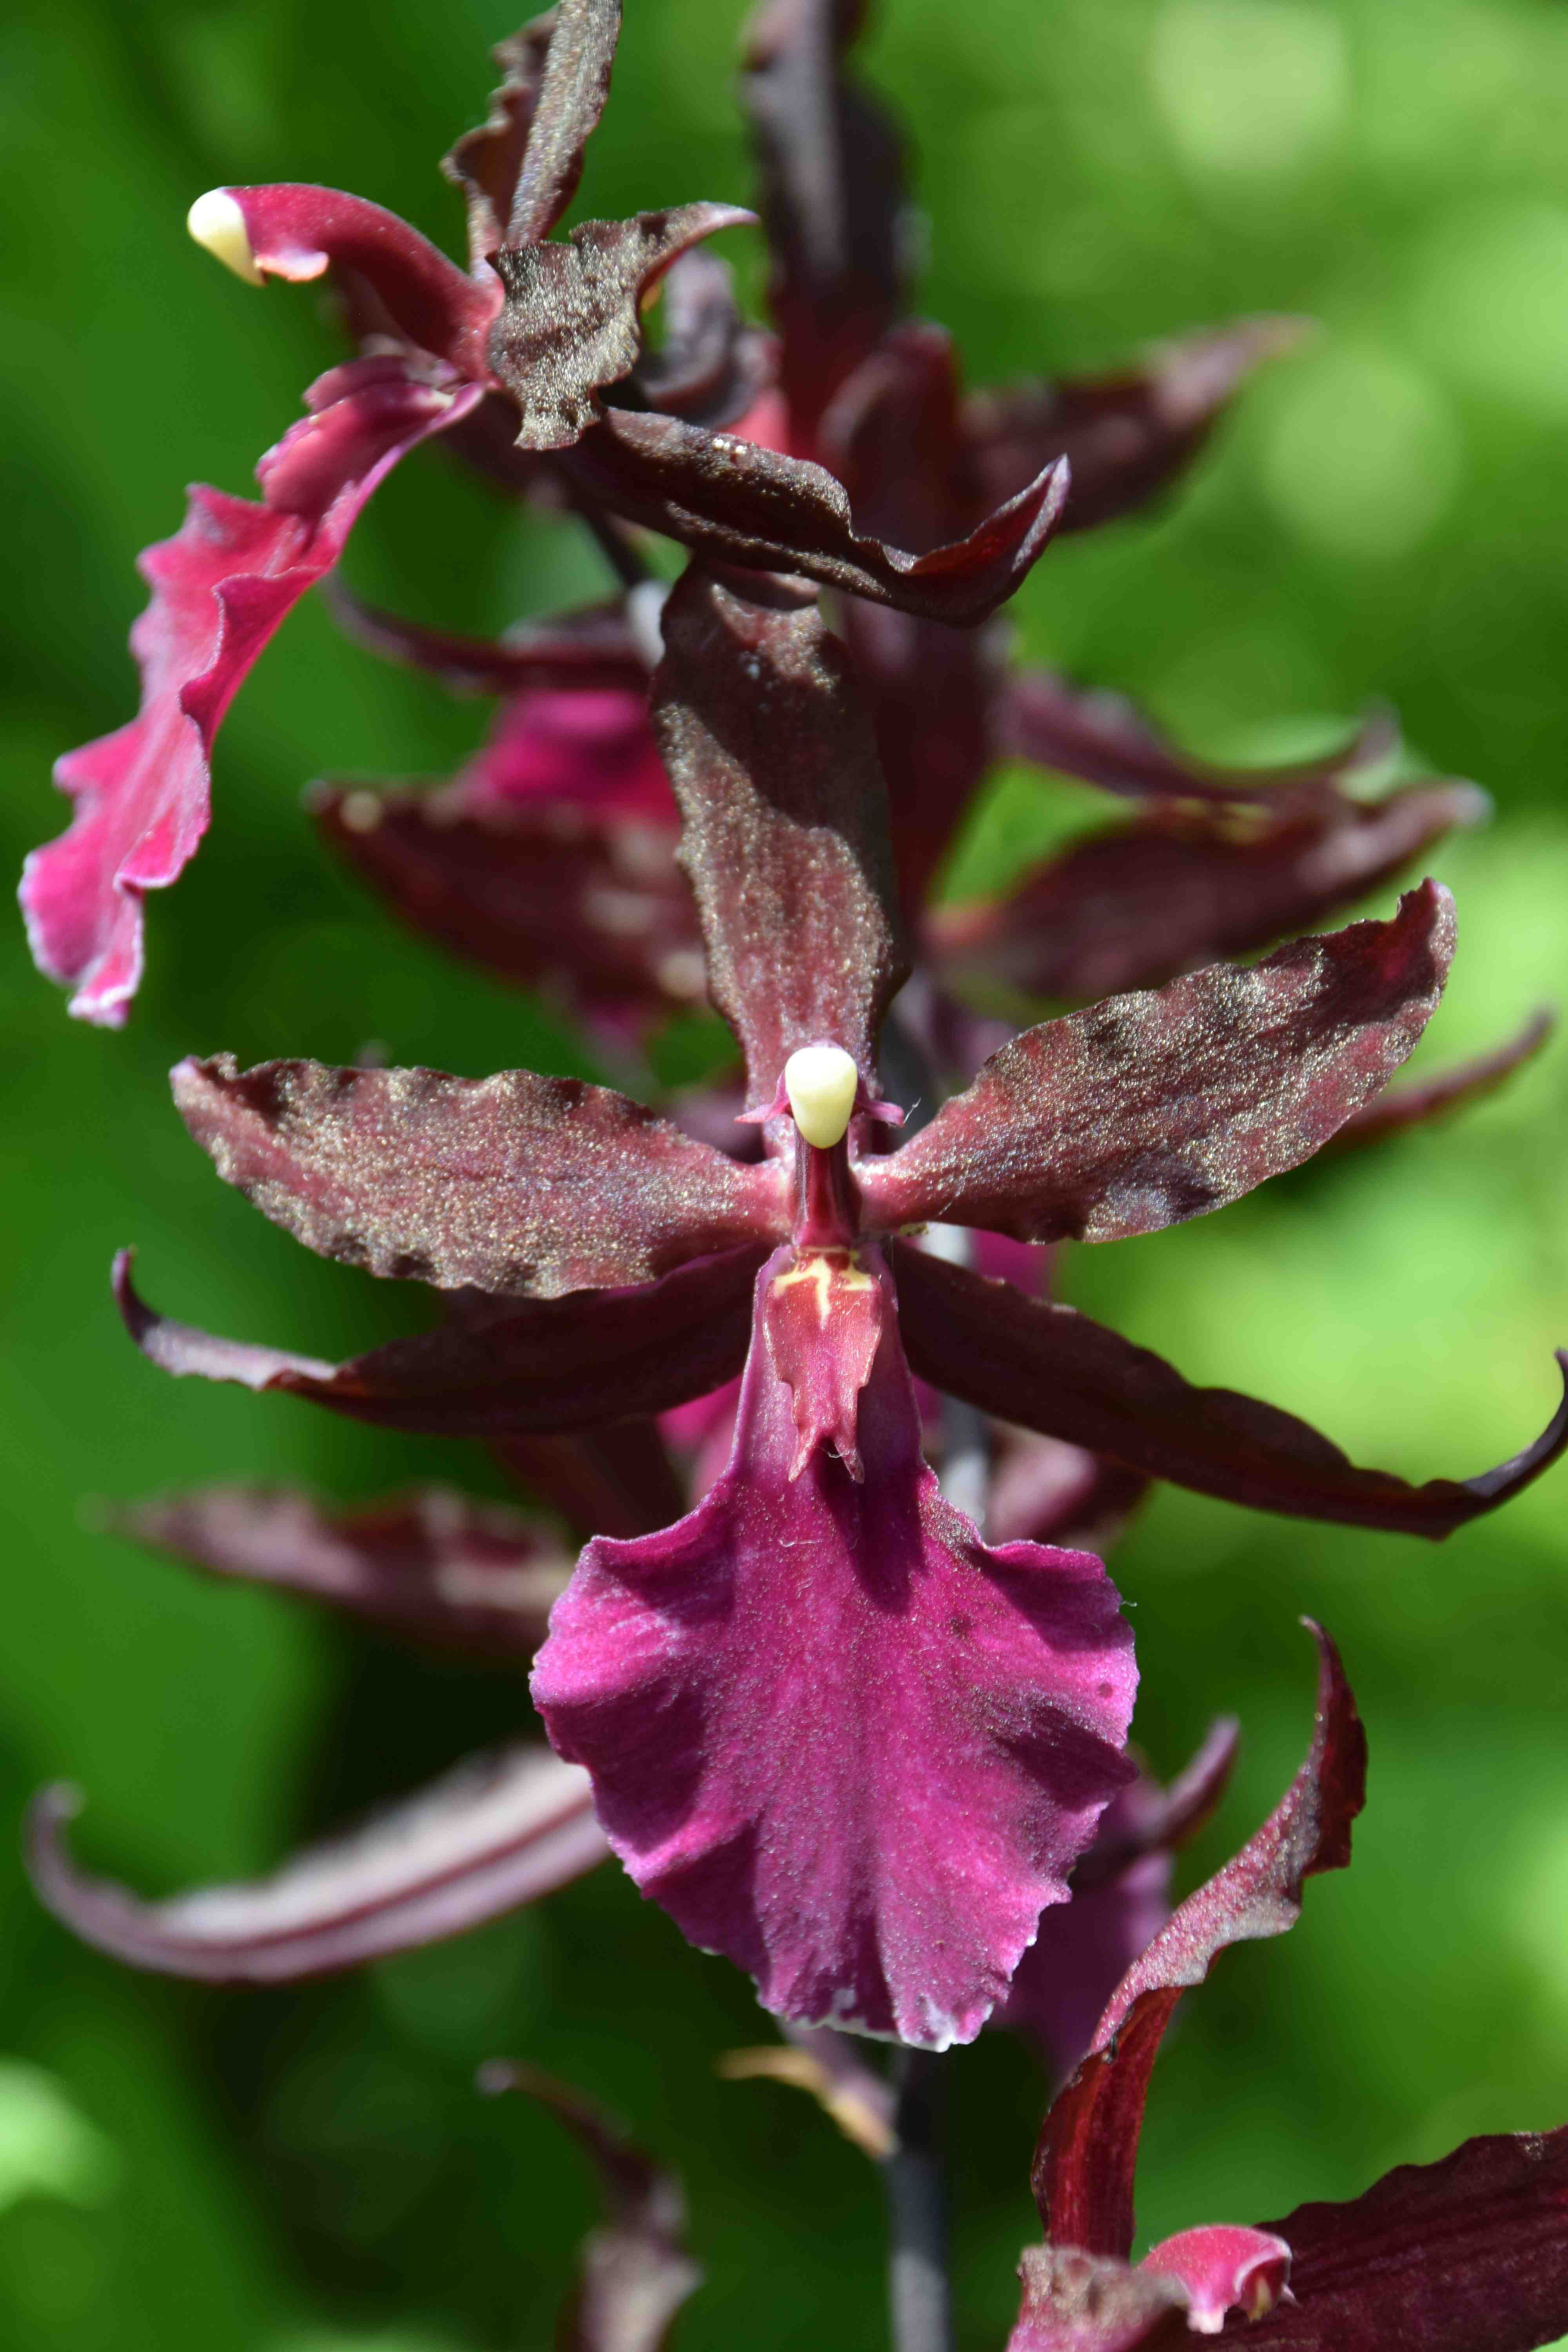 Cambria orchids | The Biking Gardener